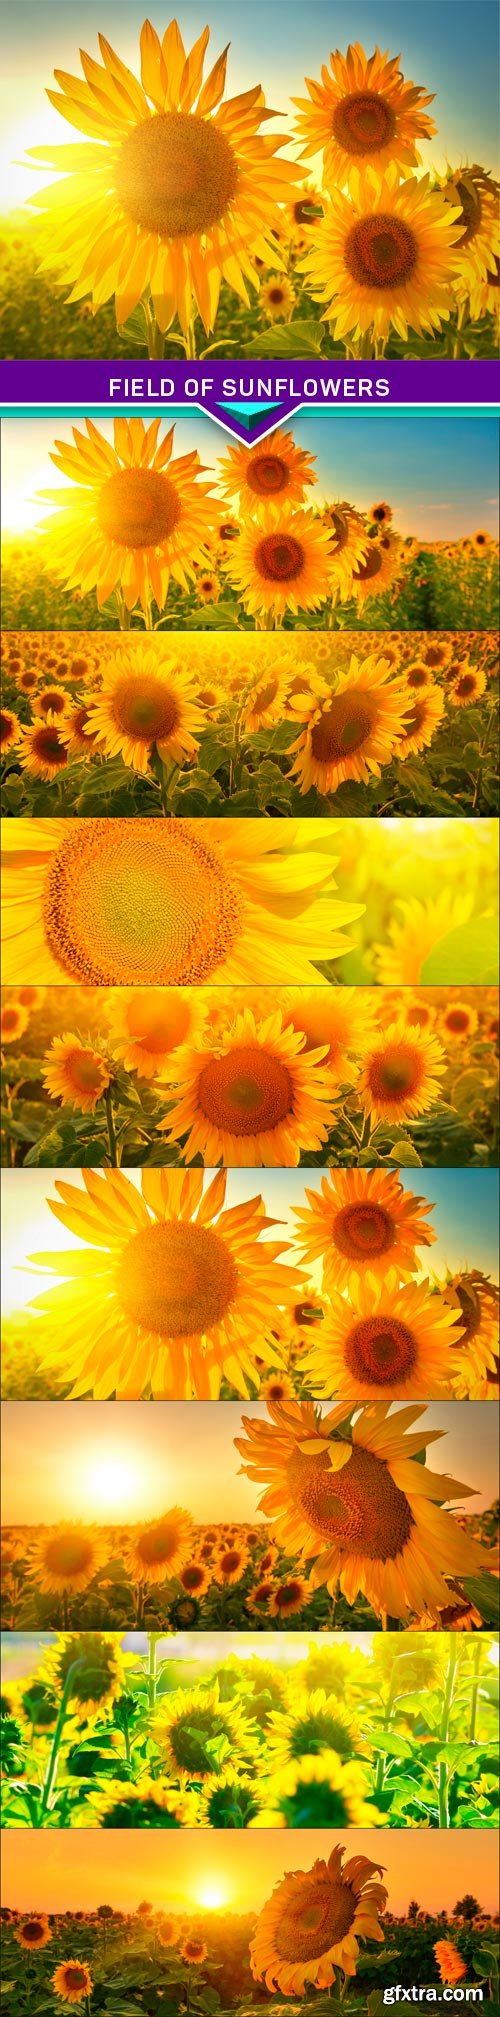 Field of sunflowers 8x JPEG